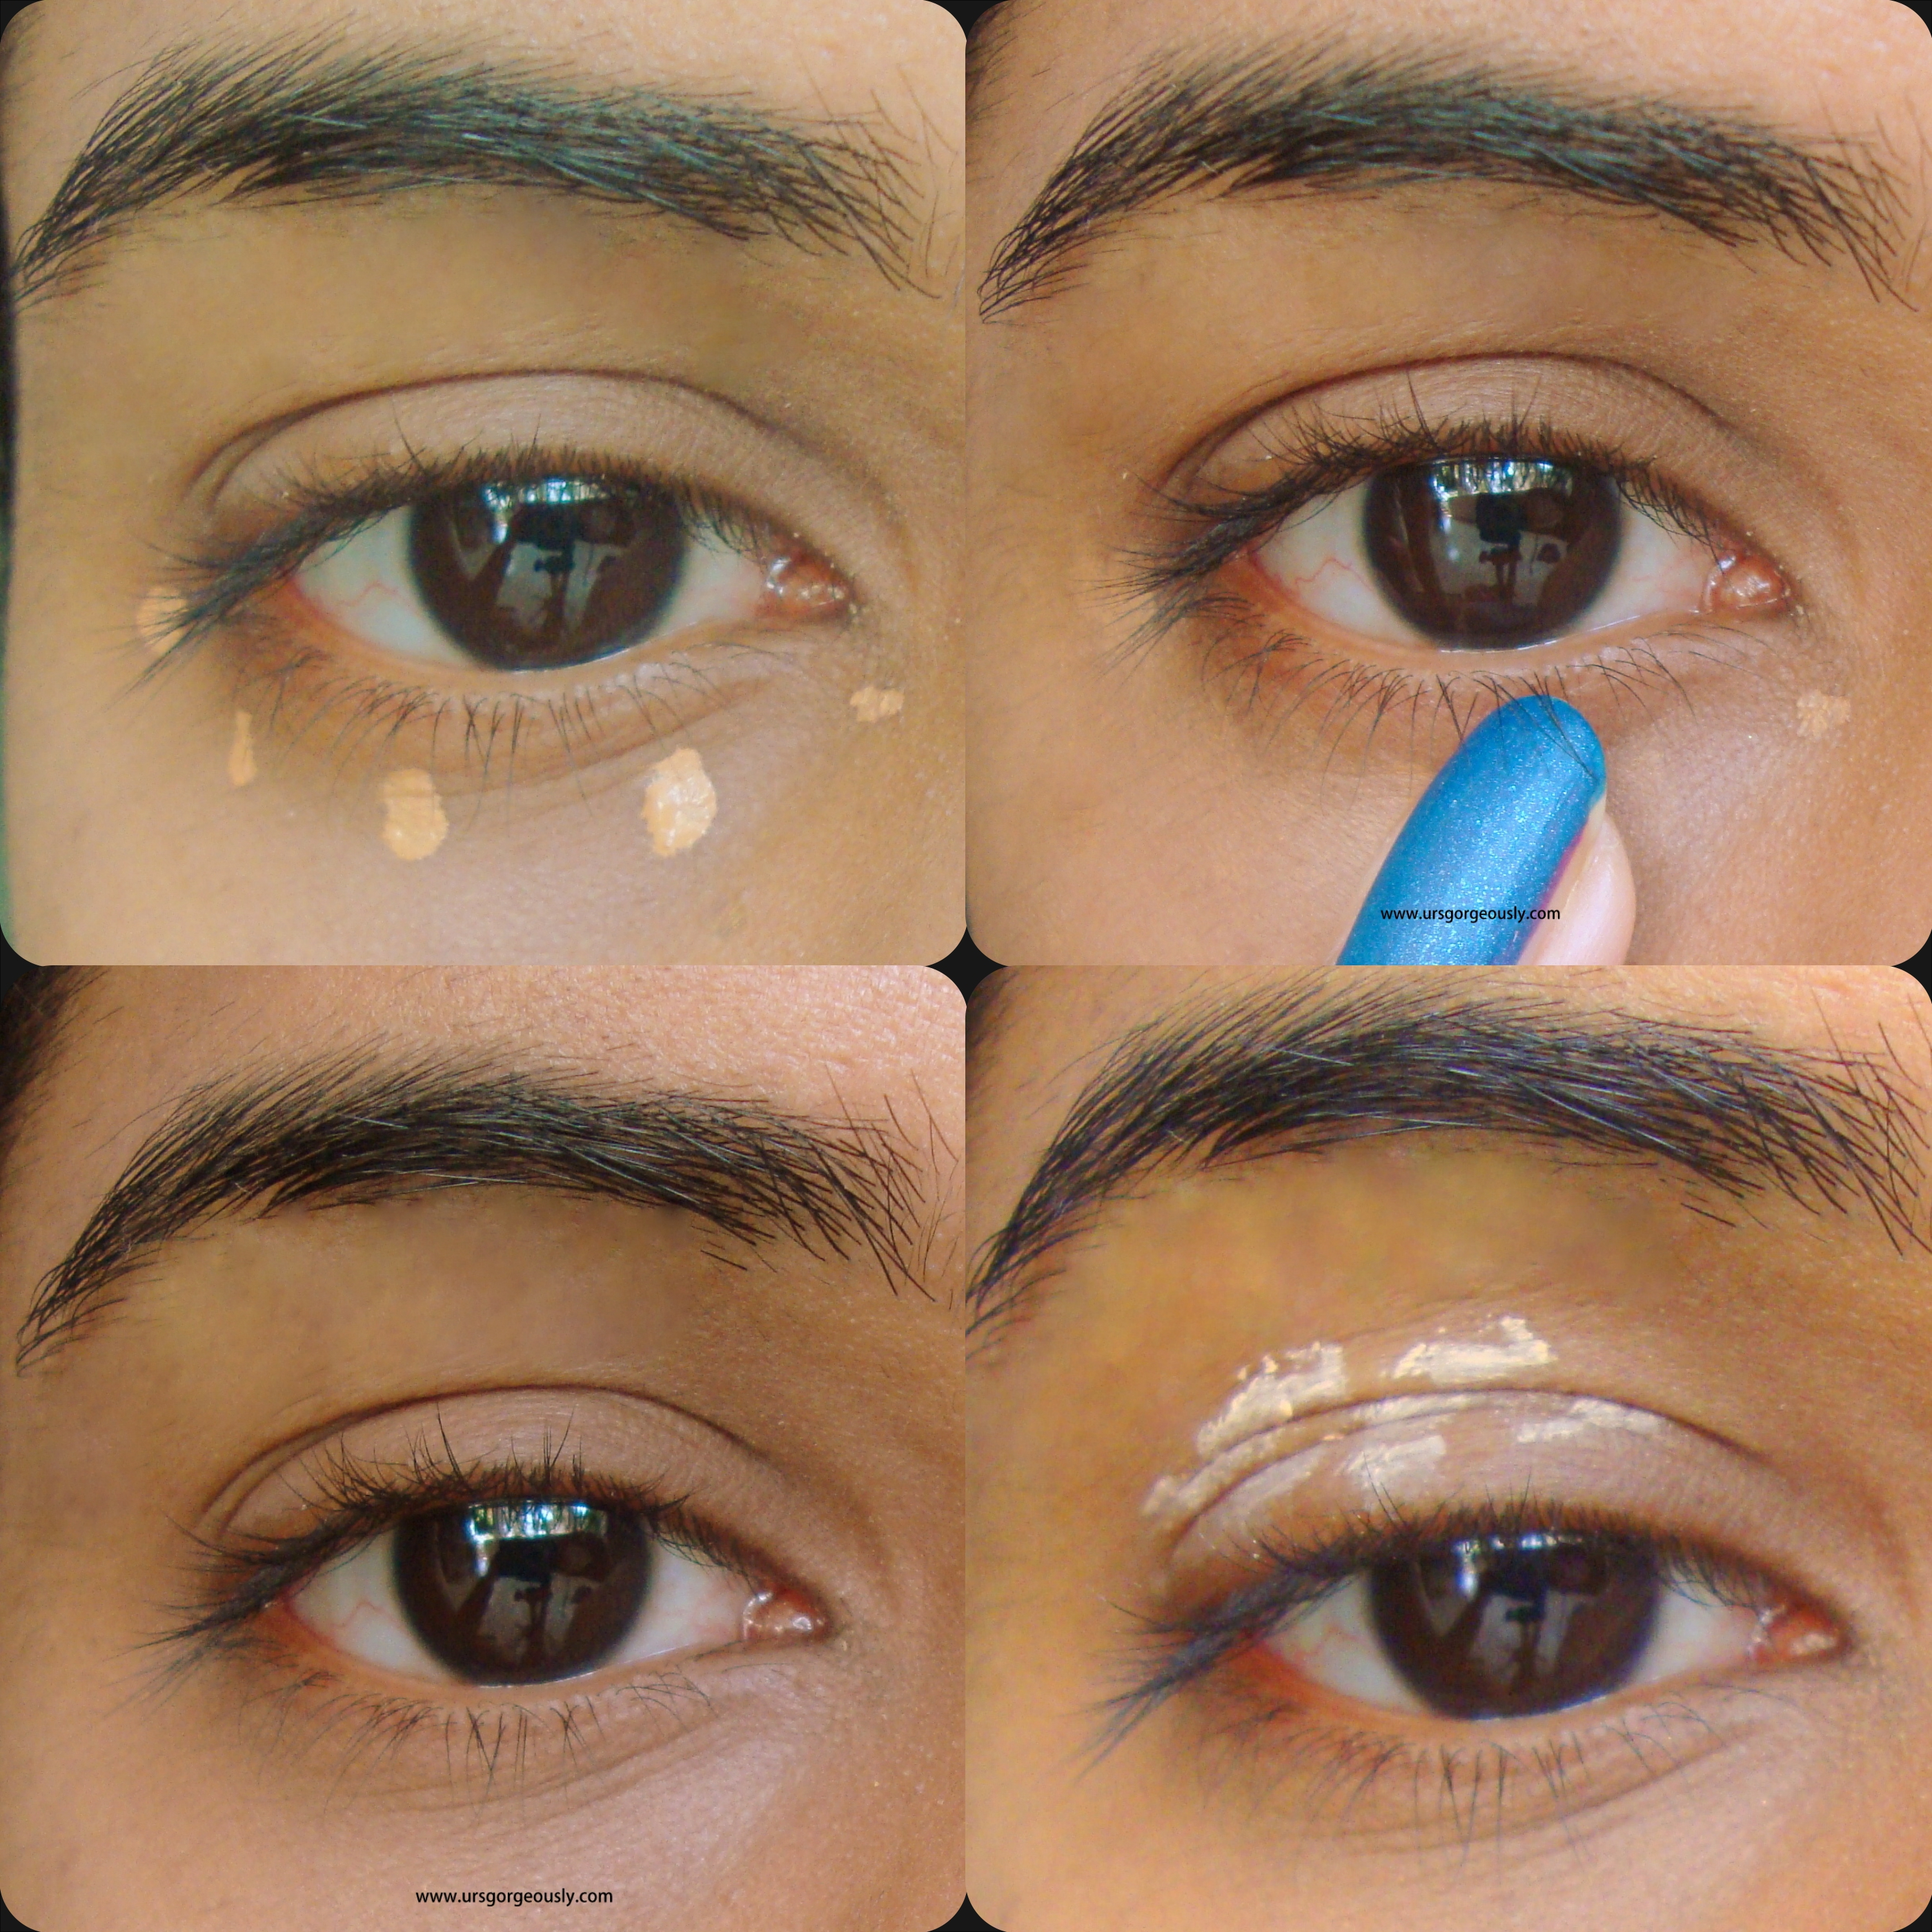 Blue Arabic Eye Makeup Arabic Style Eye Makeup Tutorial Ursgorgeously